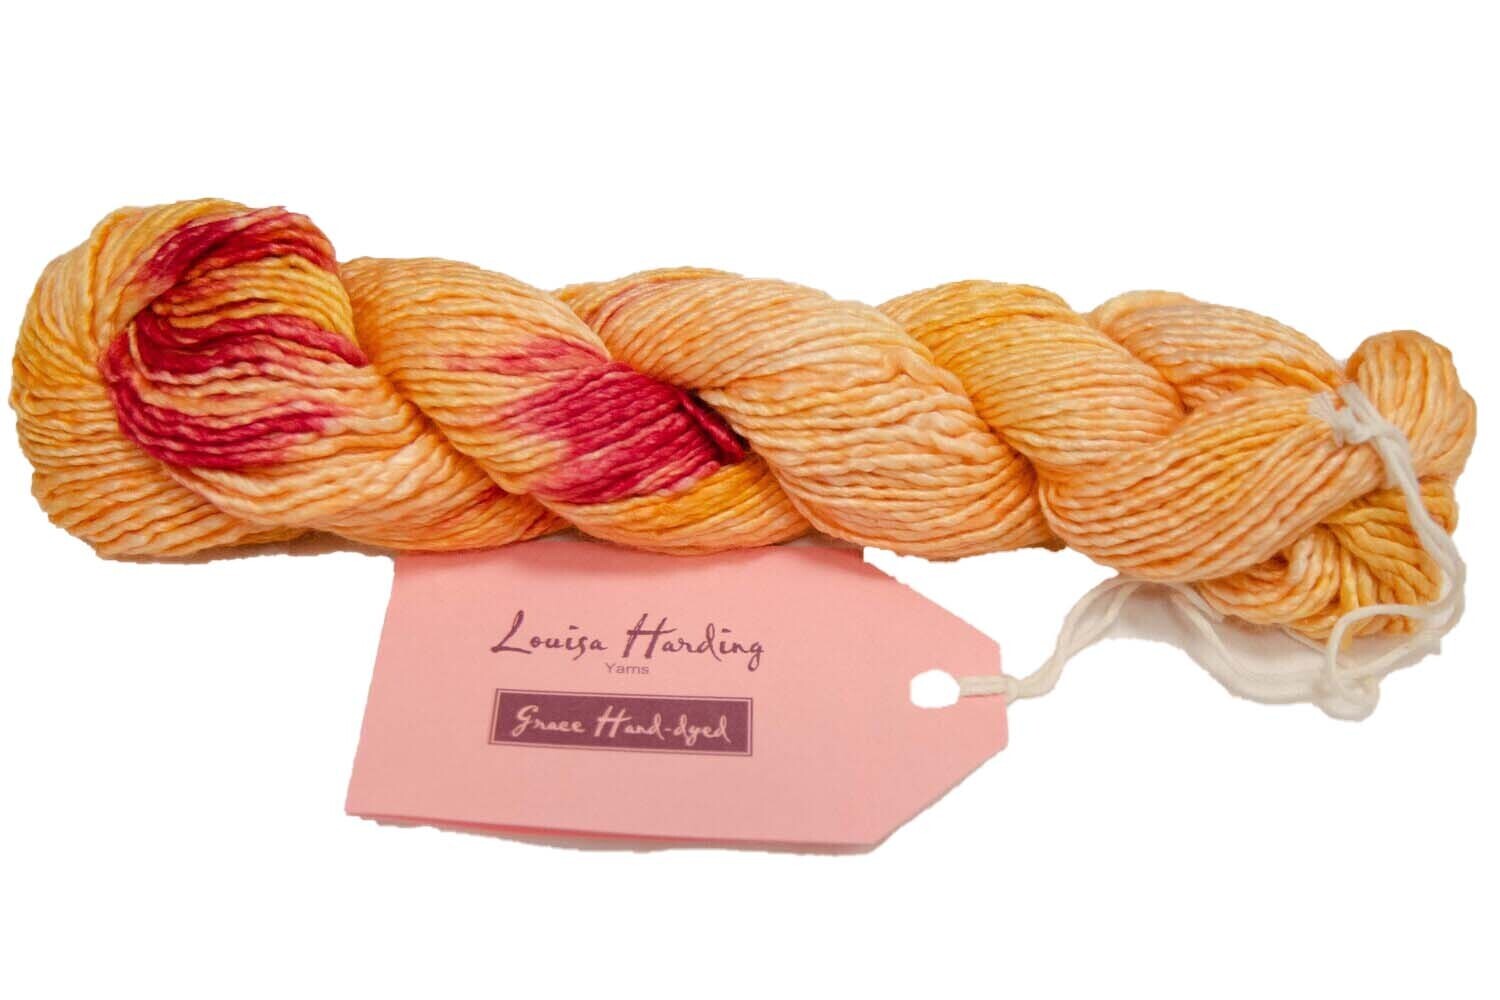 Louisa Harding - Grace handdyed garn - nr 13 - melerad gul/orange/röd